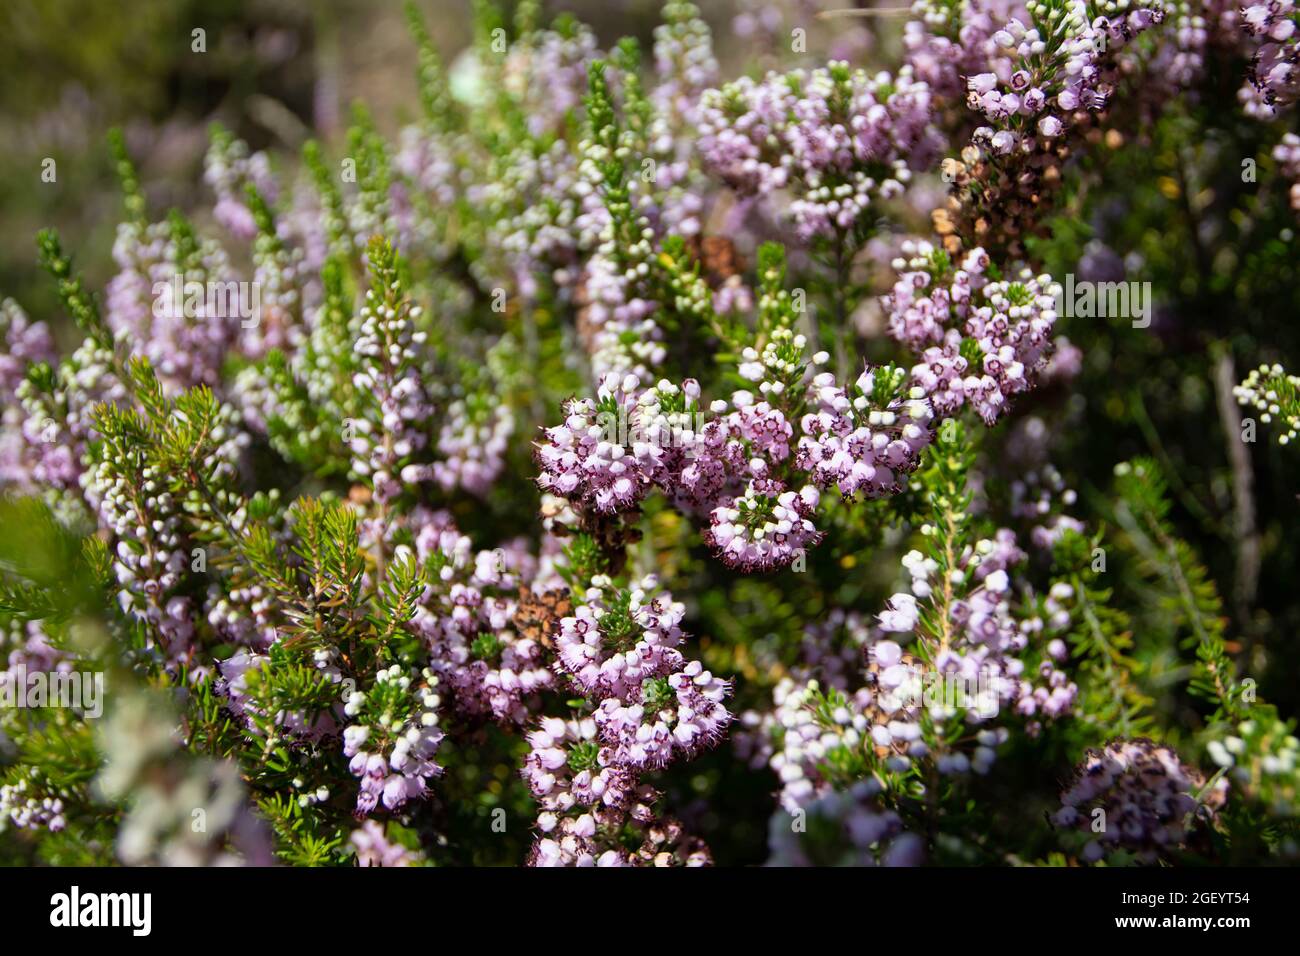 Cornish heath pink flowers. Erica vagans or wandering heath plants in full bloom. Stock Photo